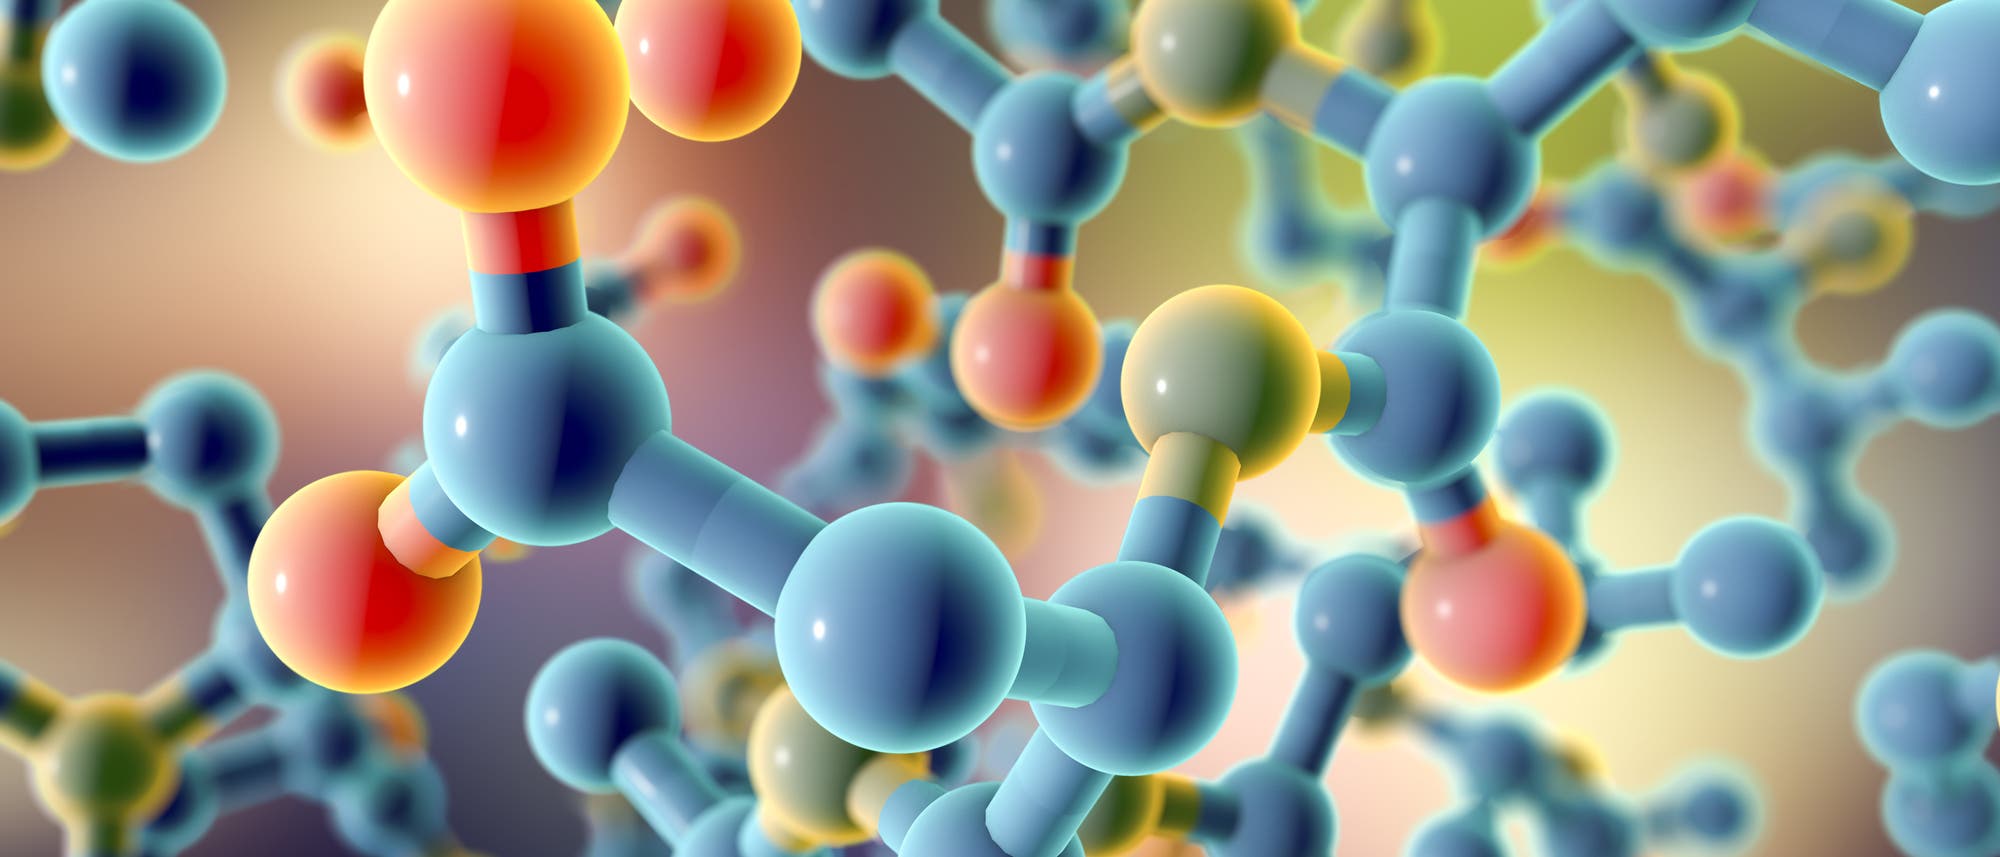 3D-Illustration blauer und orangefarbener Moleküle